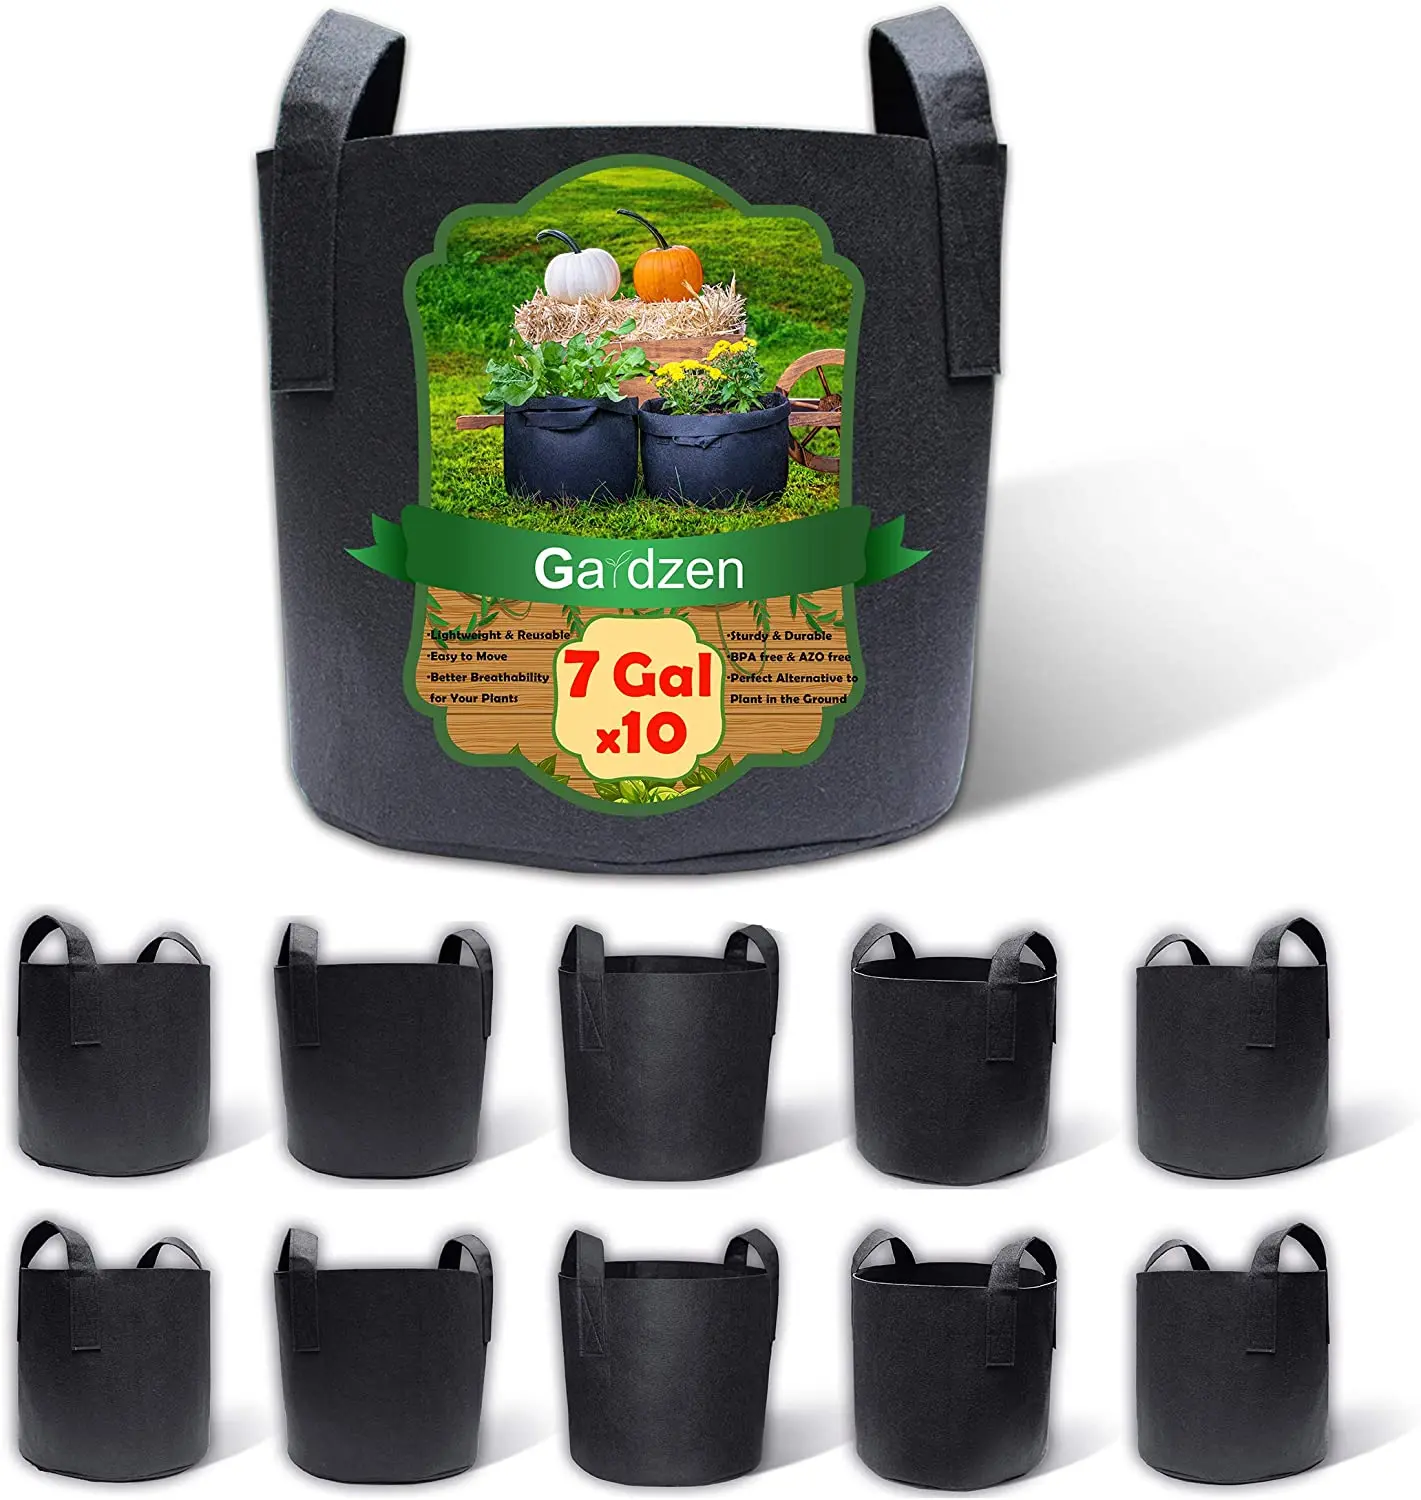 TIMESETL 6 Pack Garden Grow Bags 3 Gallon/5 Gallon/7 Gallon Reusable and Durable Aeration Fabric Pots Container with Strap Handles 